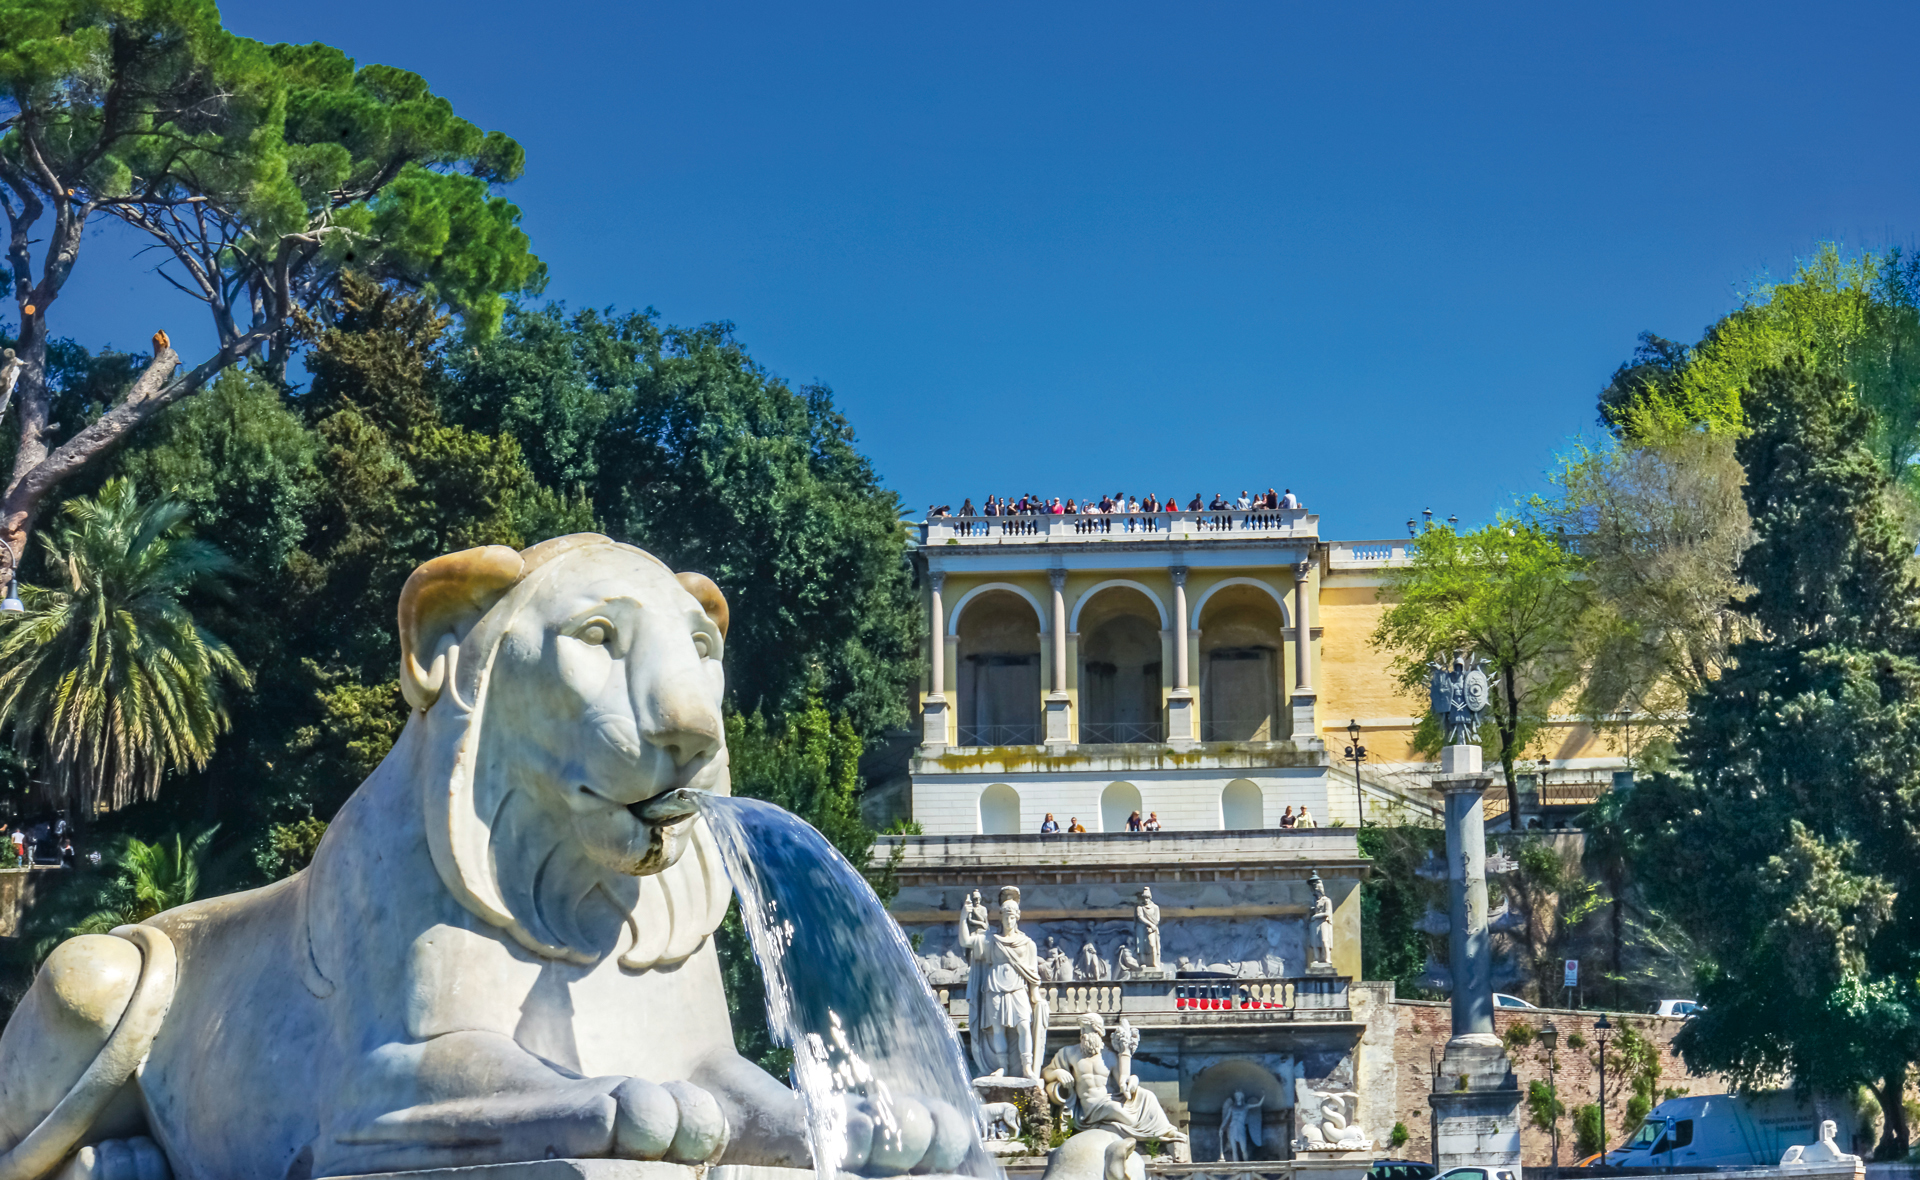 Lion Statue Fountain Goddess of Rome Statues Piazza del Popolo People's Piazza Rome Italy. Fountain built early 1800s Back Pincio Hill Villa Borghese Gardens